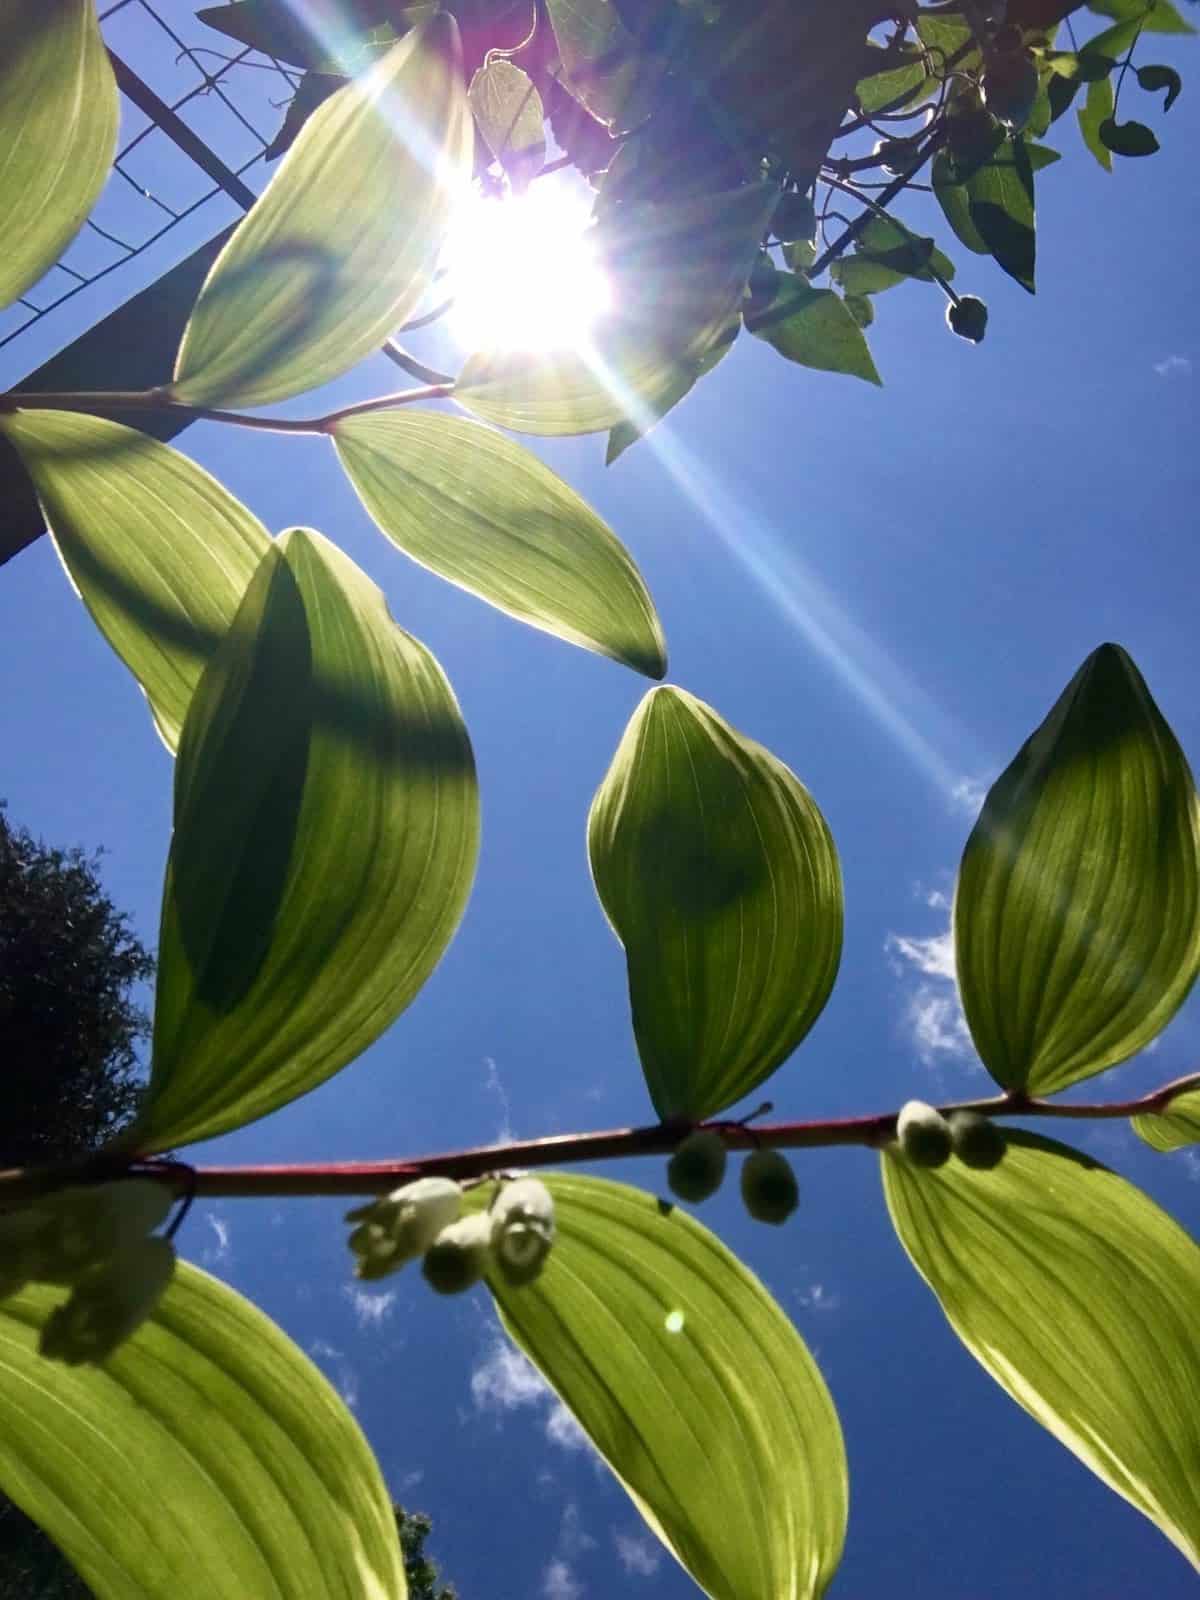 sunbeams, blue sky and green leaves